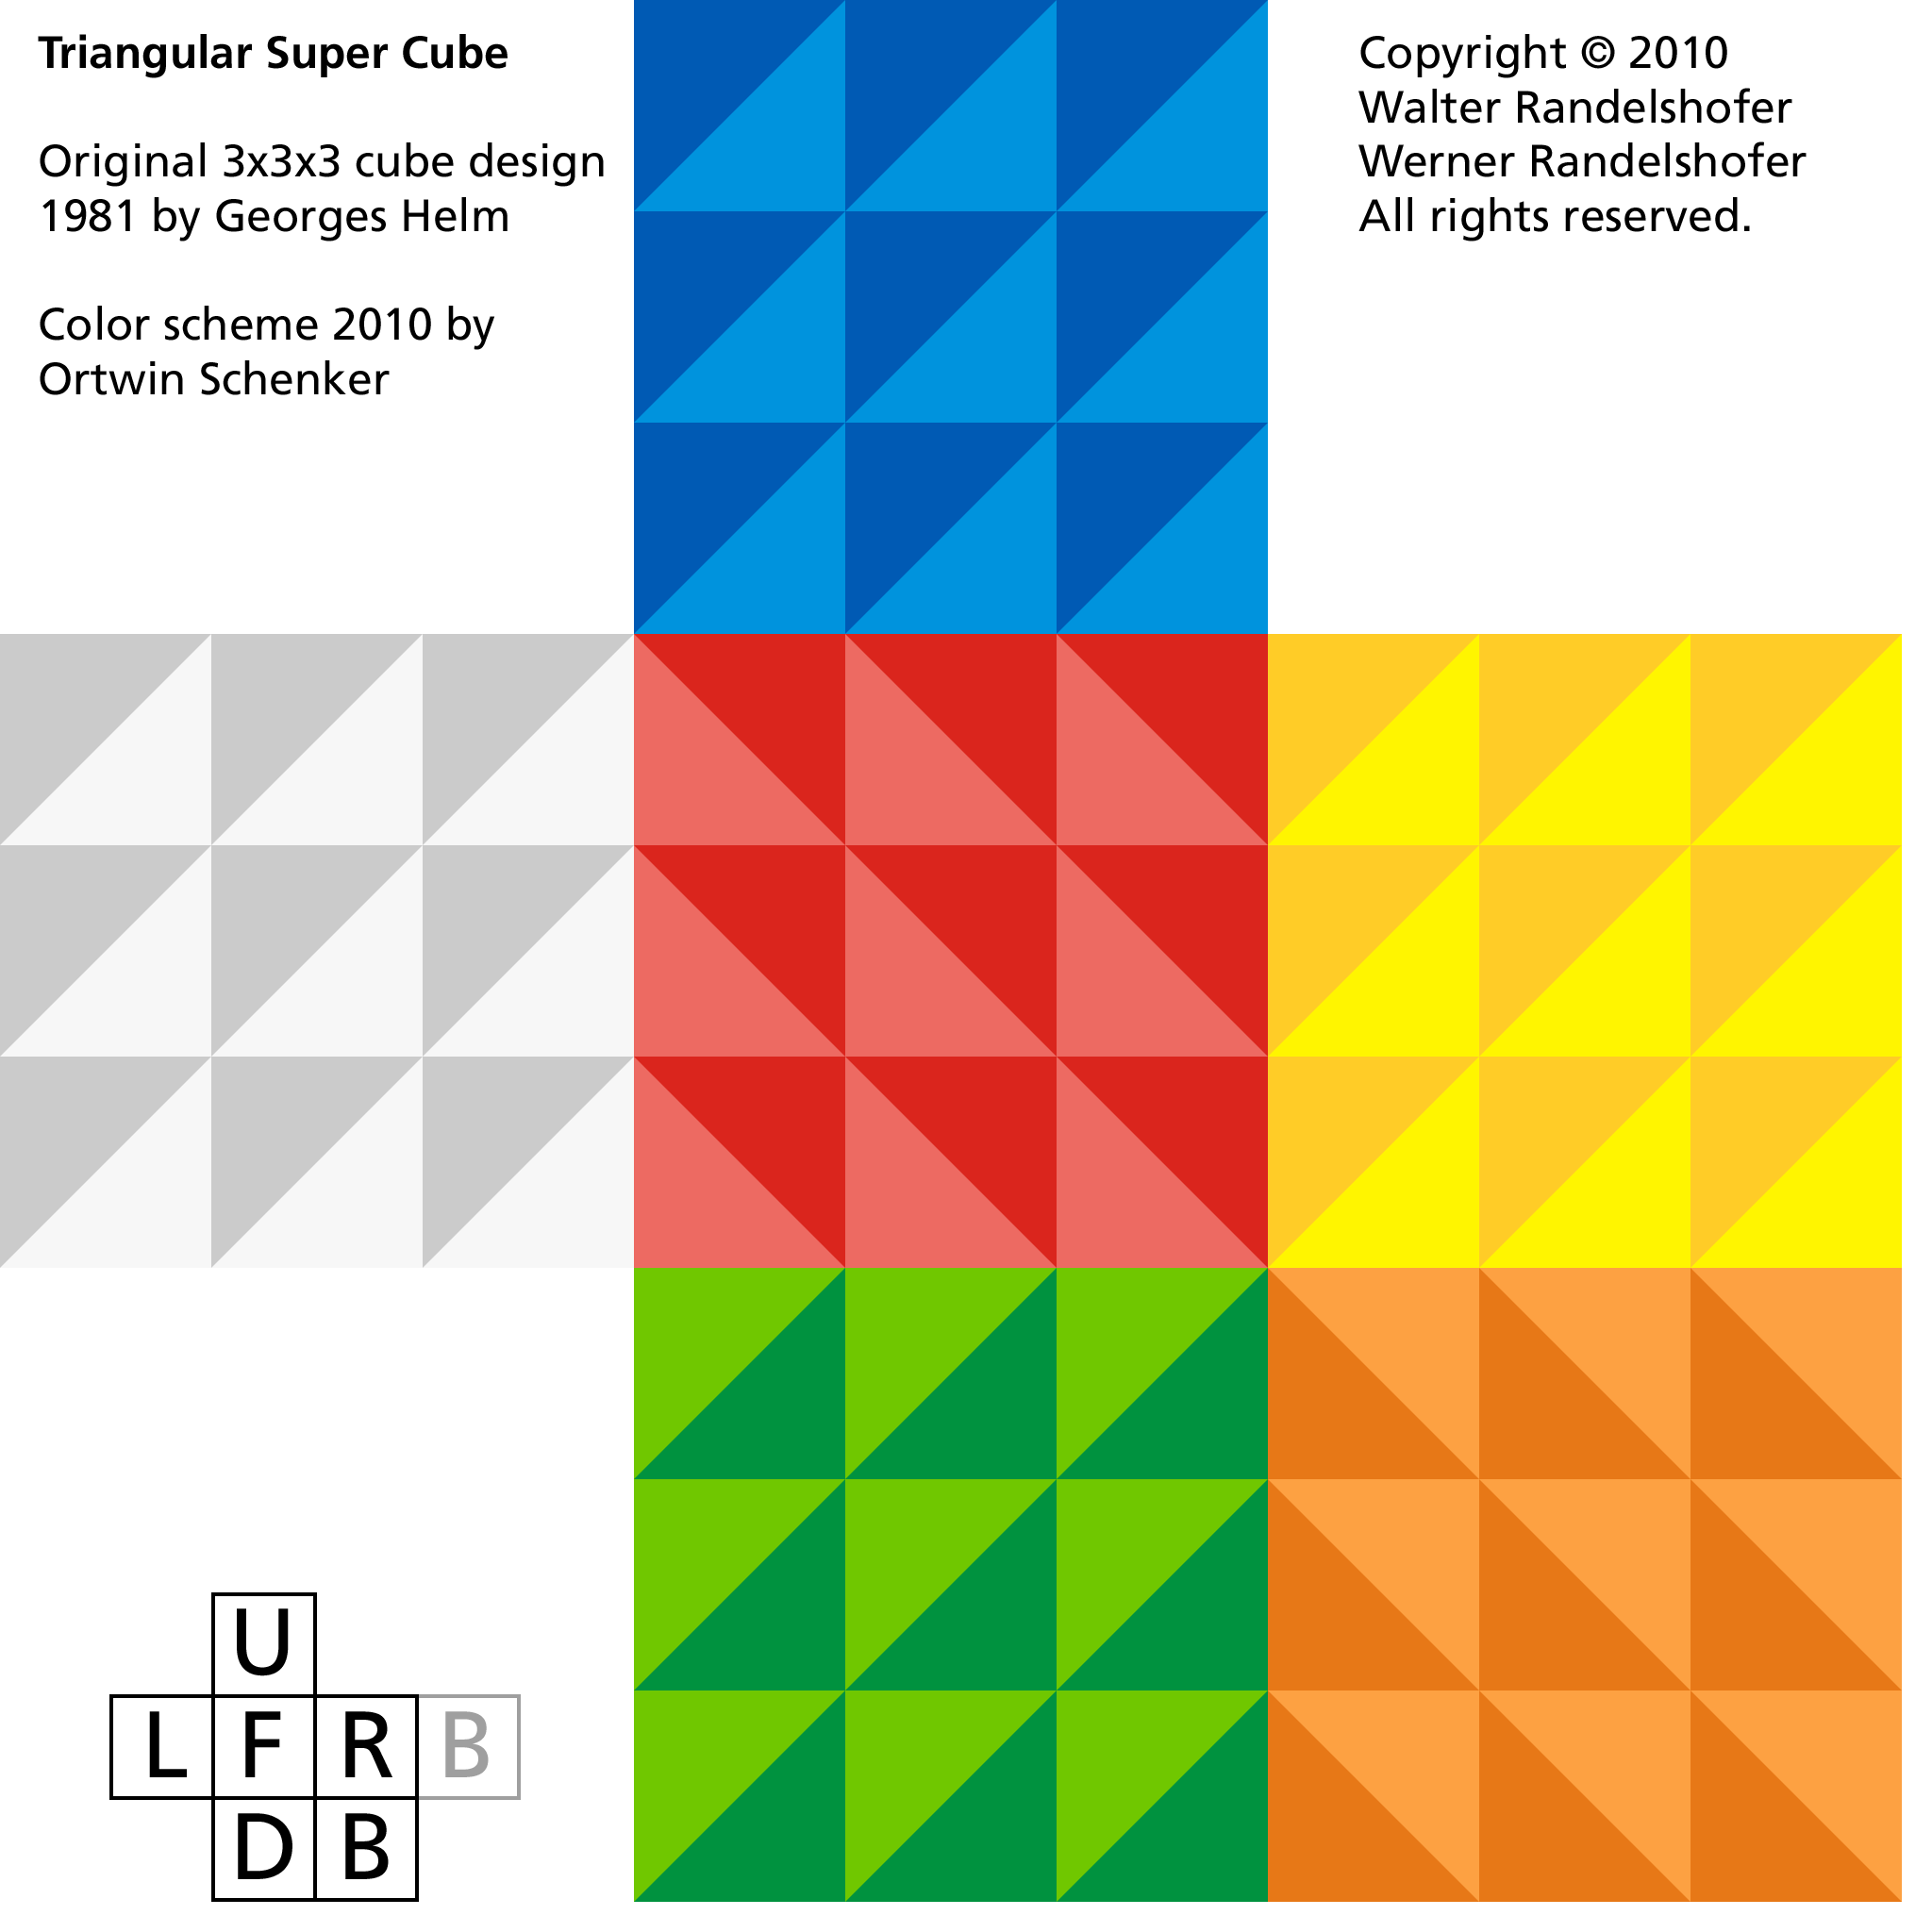 http://www.randelshofer.ch/rubik/virtualcubes/rubik/super_cubes/images/TriangularSuperCubeB_2048.gif